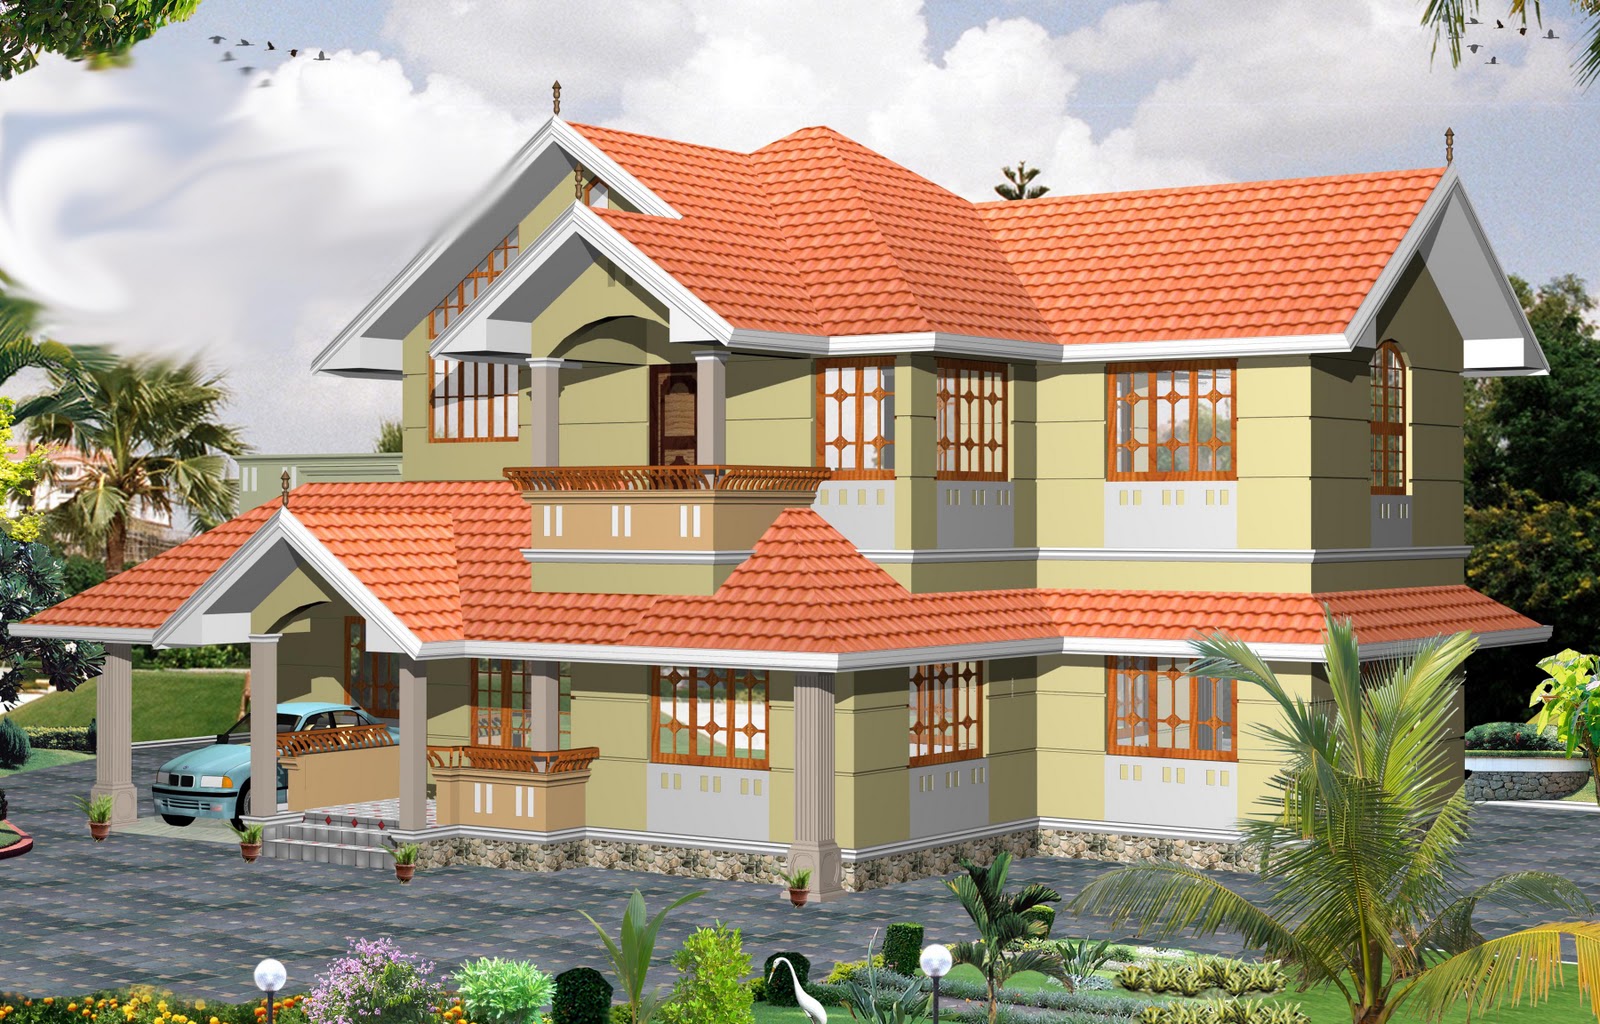 Kerala Building Construction: 2000 sqft 3BHK House Plan Kerala Home